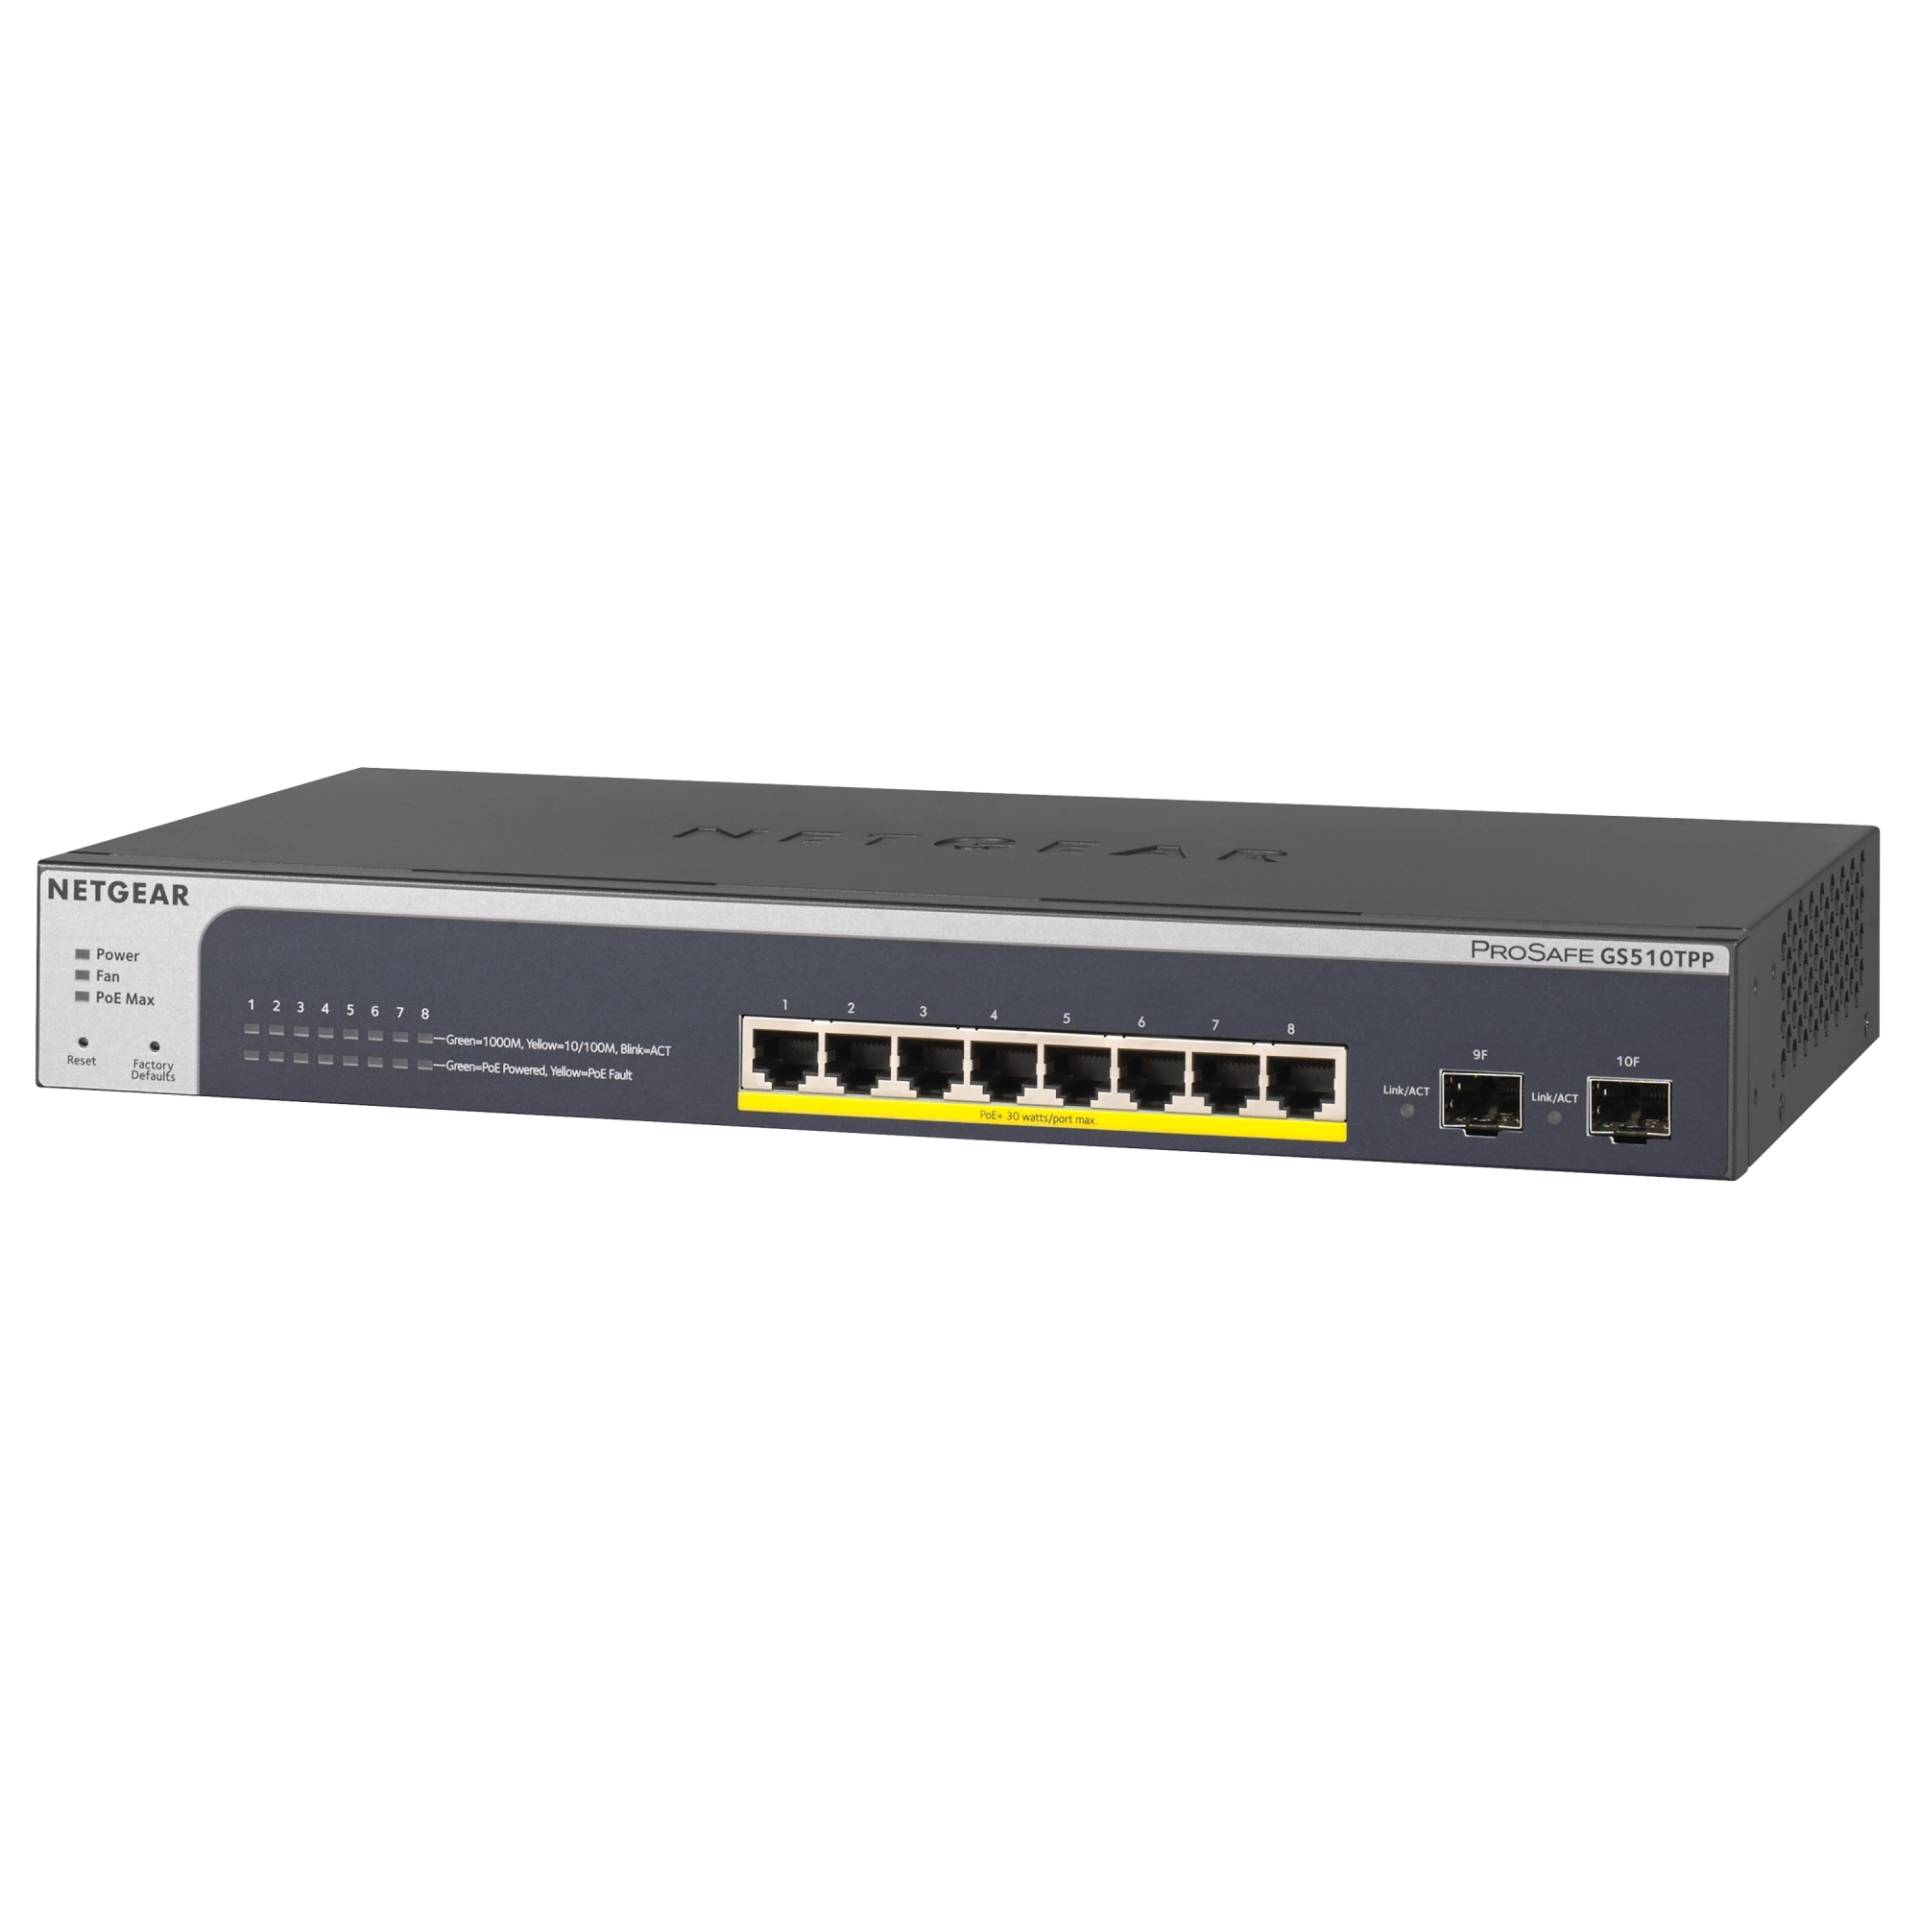 NETGEAR 8-Port PoE+ GB WebMgd Switch, 2 SFP Ports, 190W (GS510TPP) von Netgear